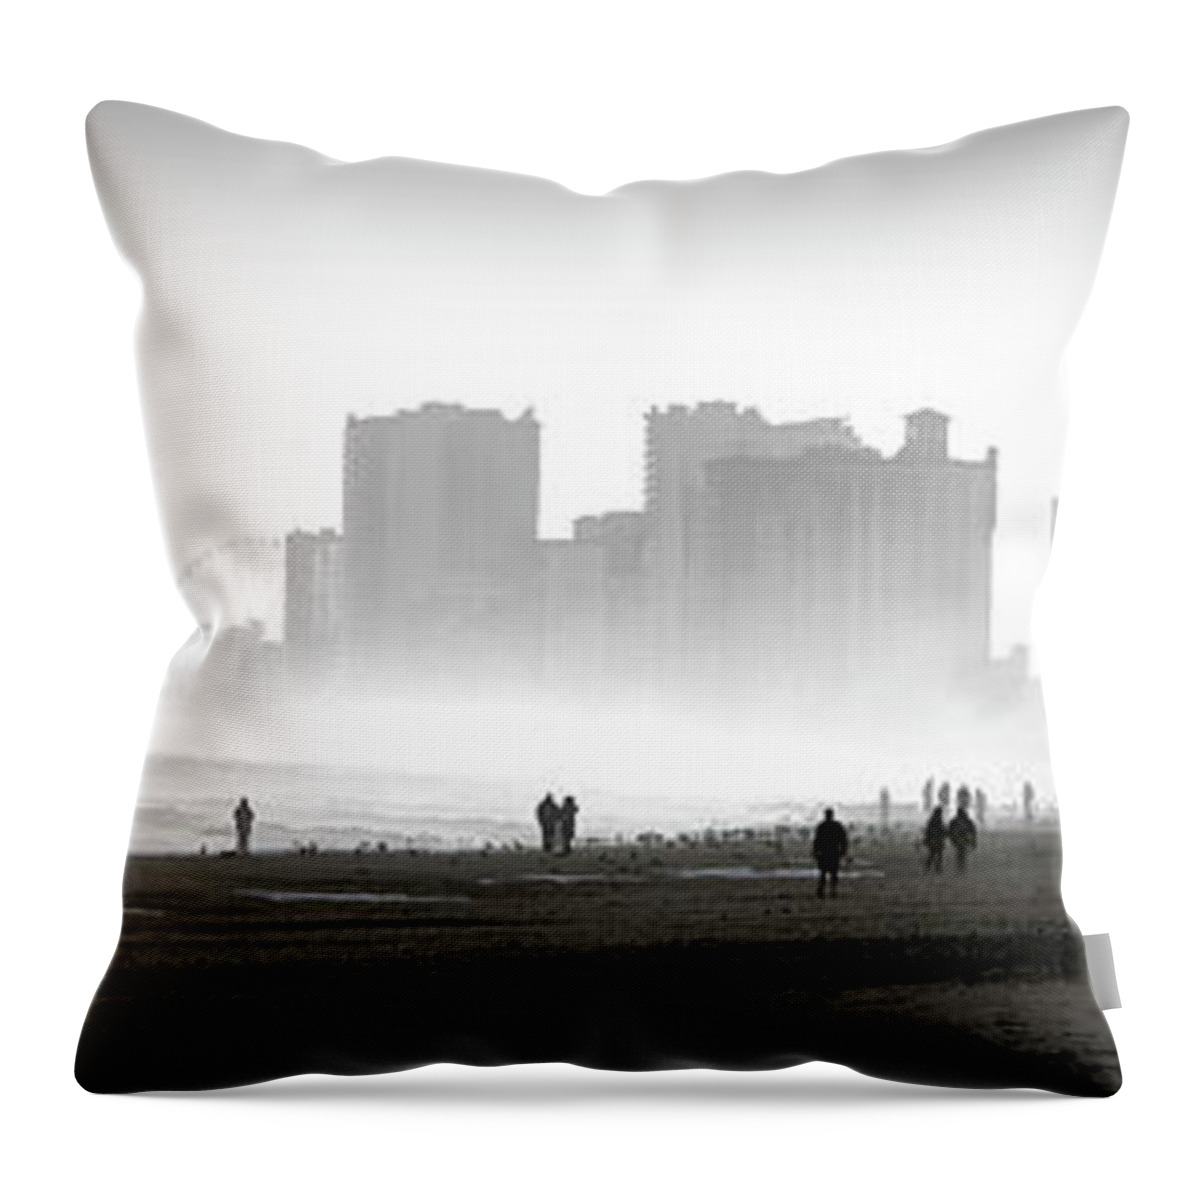 Sunset Throw Pillow featuring the photograph Sunset on Myrtle Beach by Allen Carroll